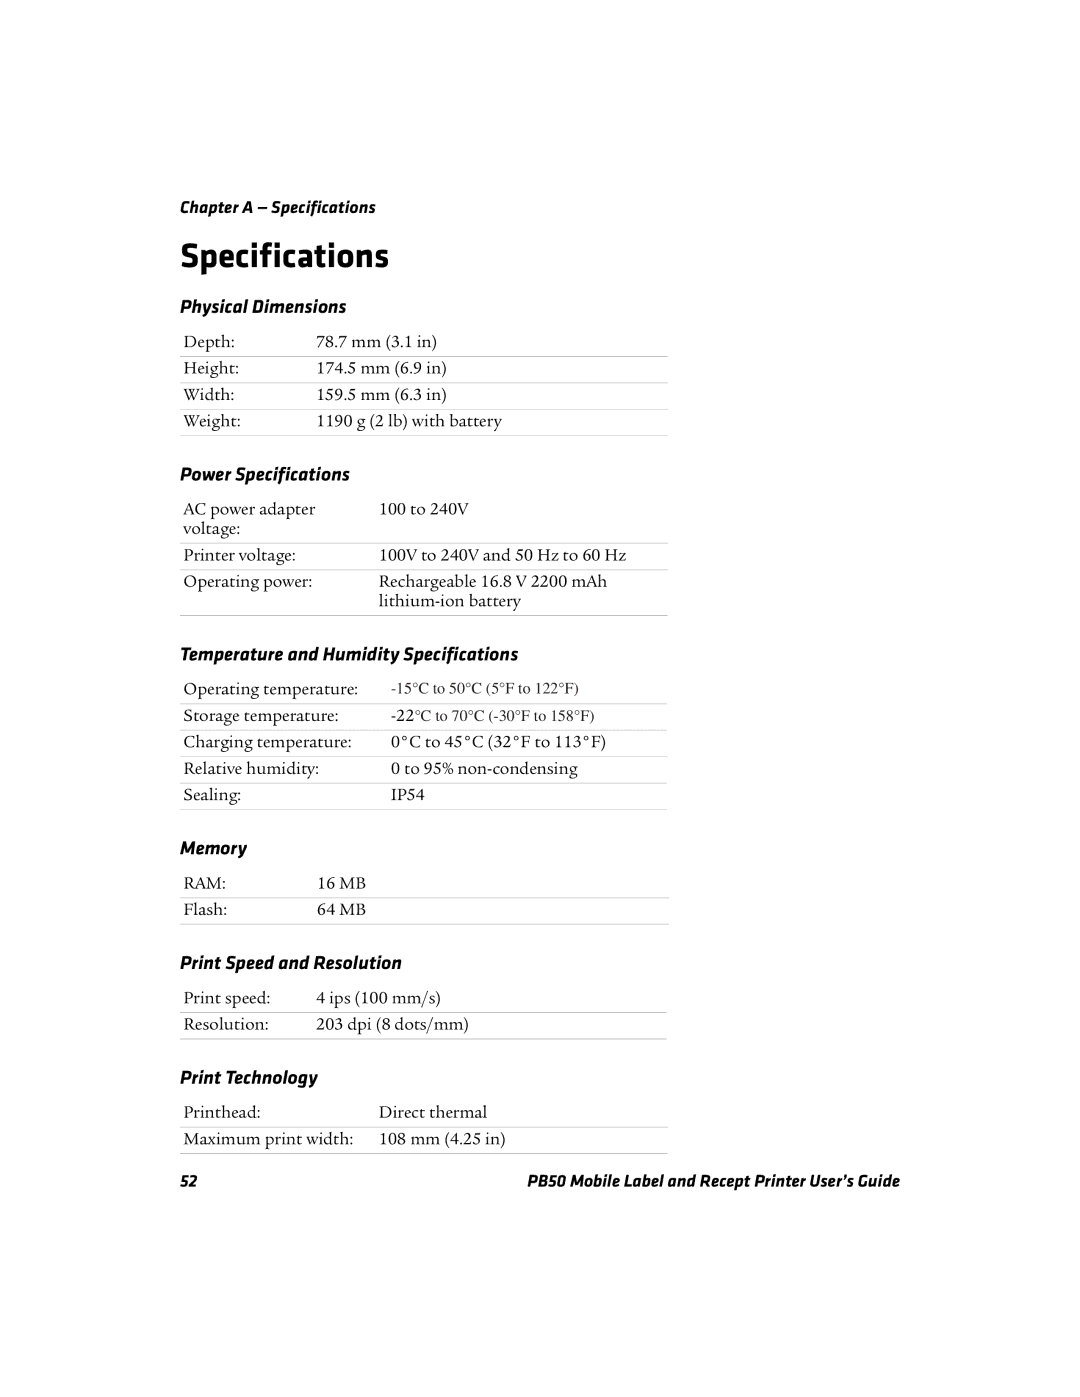 Intermec PB50 manual Specifications 